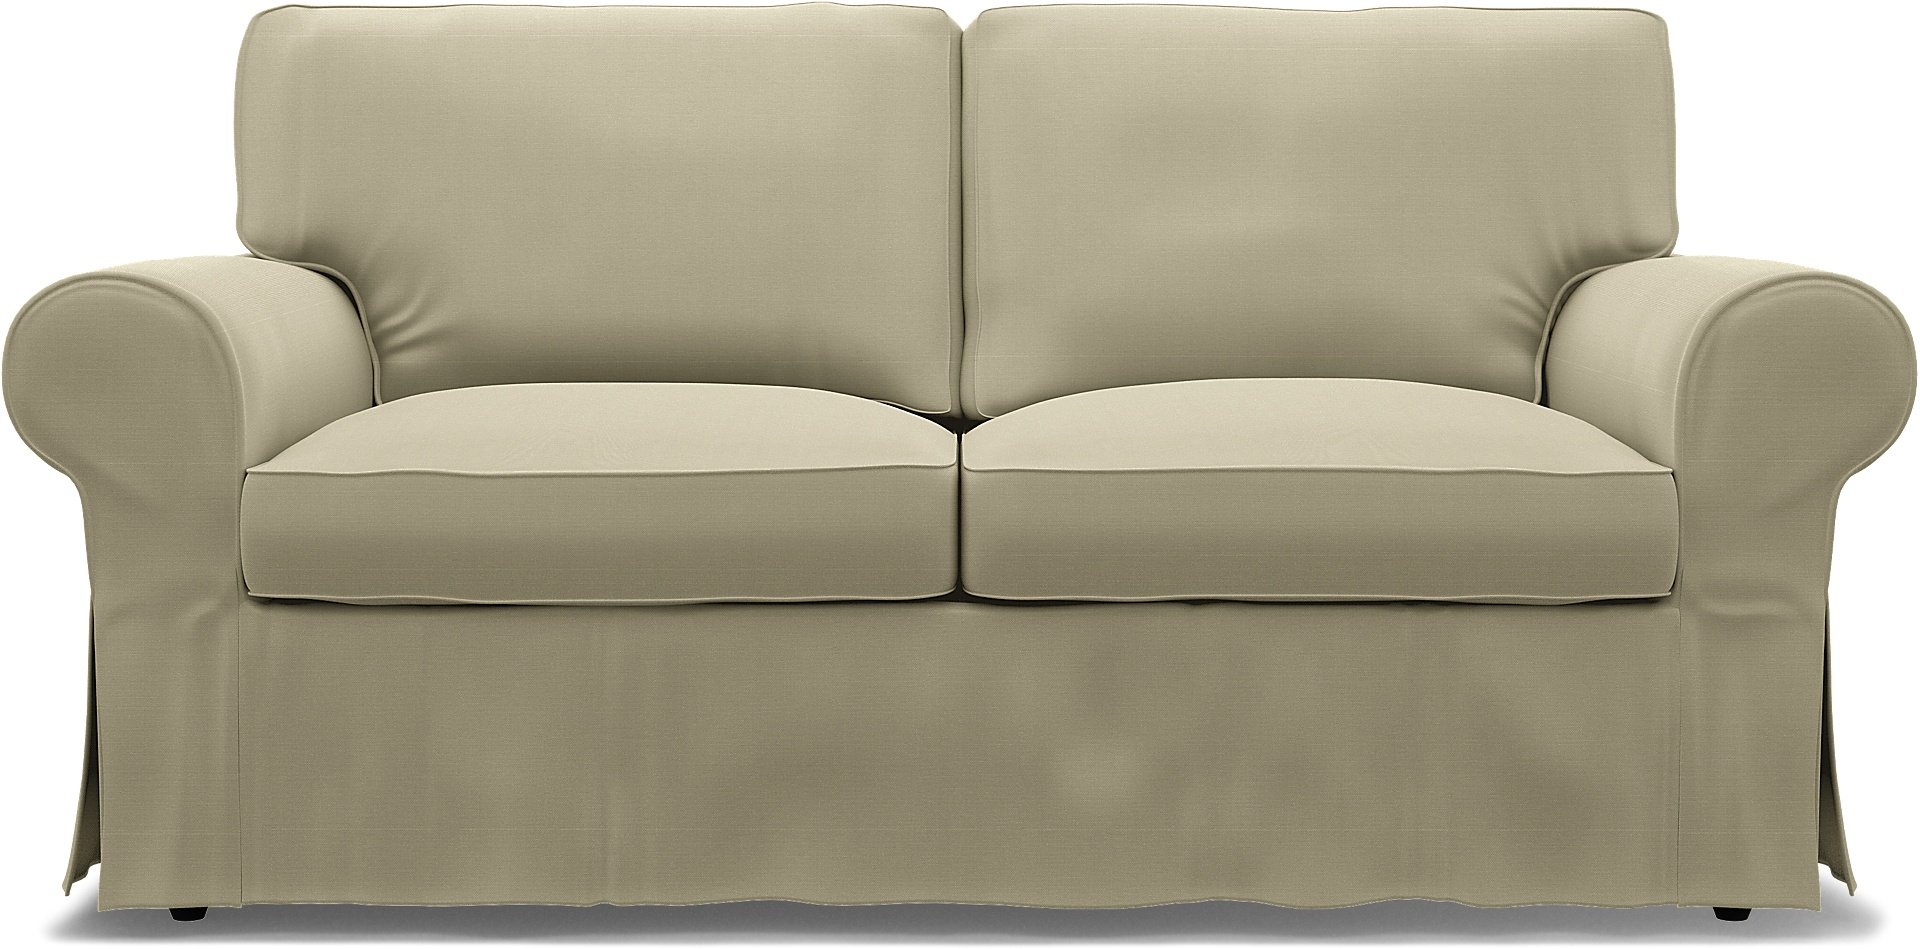 IKEA - Ektorp 2 Seater Sofa Bed Cover, Sand Beige, Cotton - Bemz